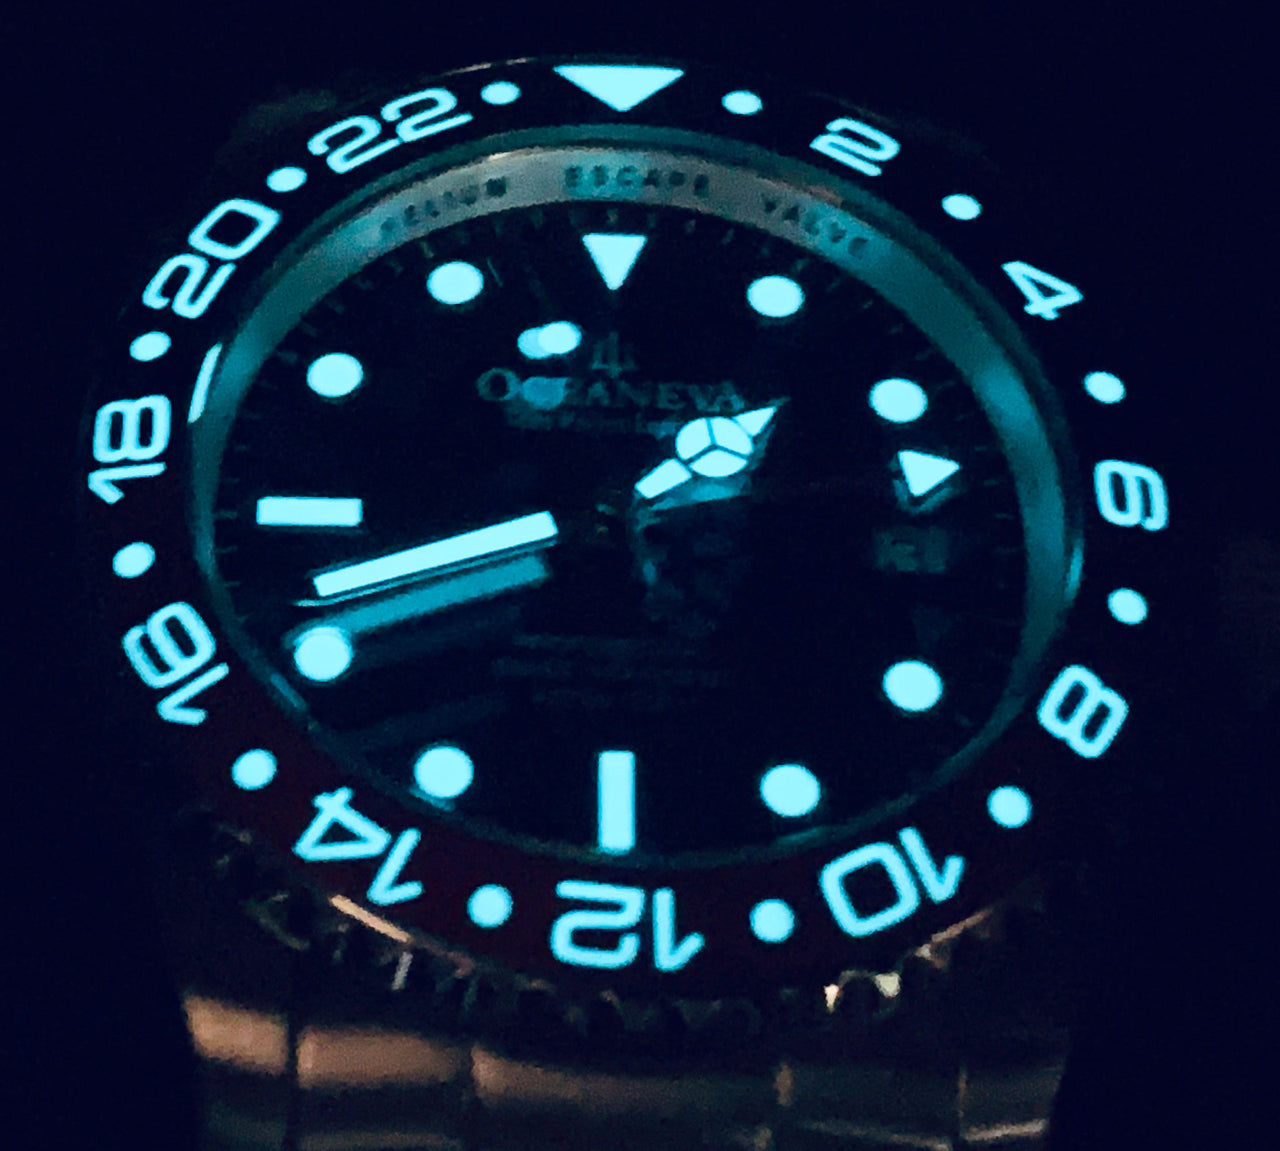 Oceaneva™ Men's GMT Deep Marine Explorer 1250M Pro Diver Watch Blue and Black